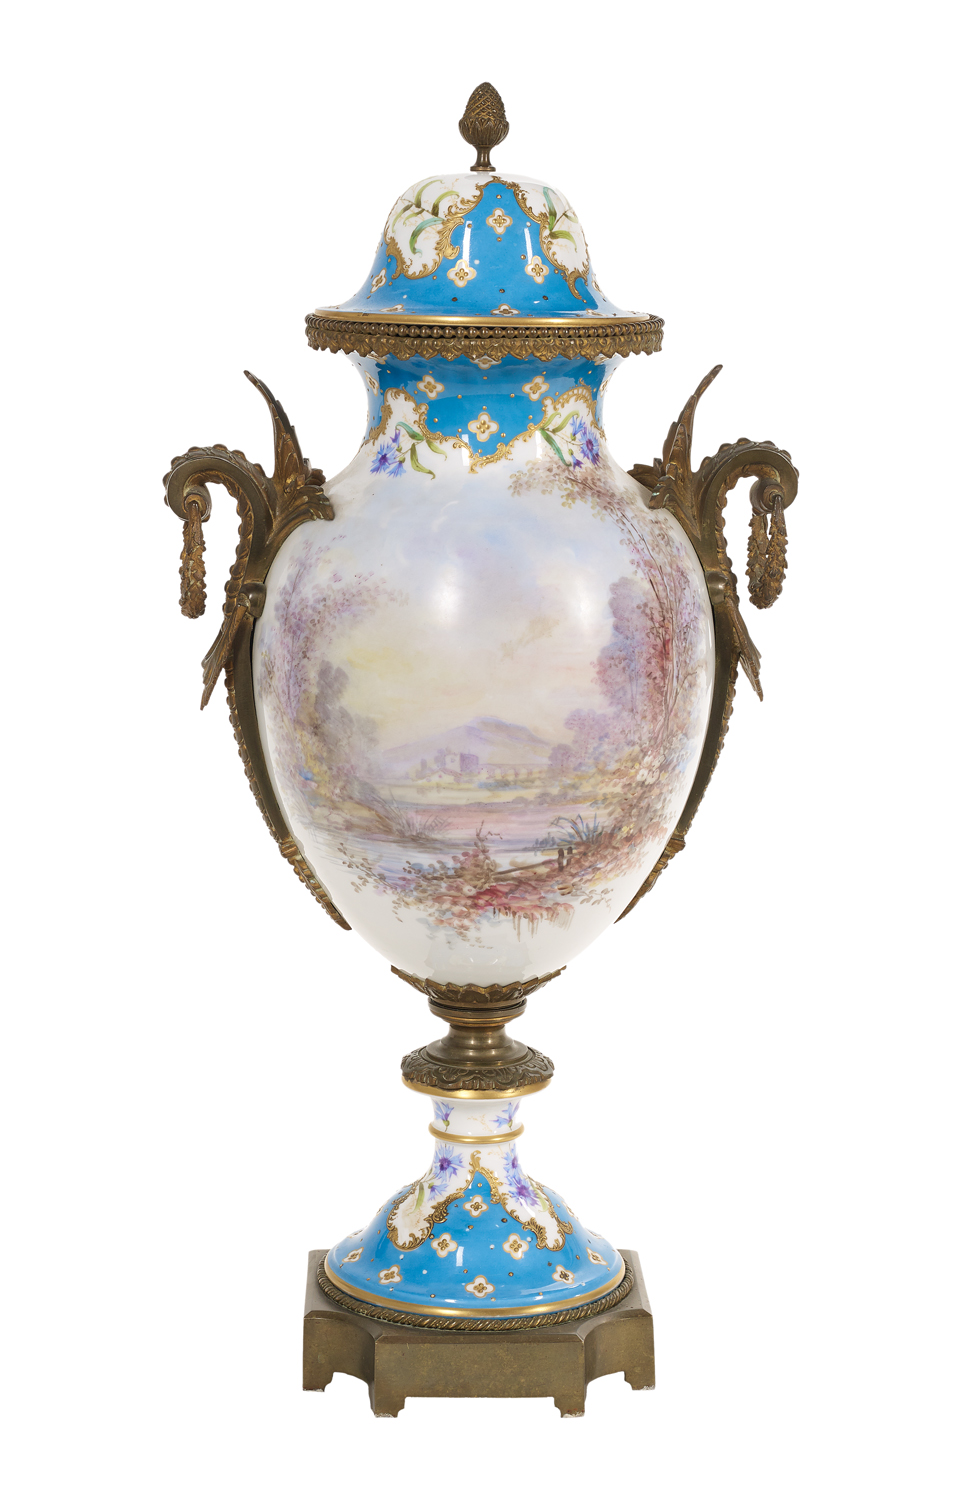 French Bronze-Mounted Porcelain Urn - Image 3 of 4